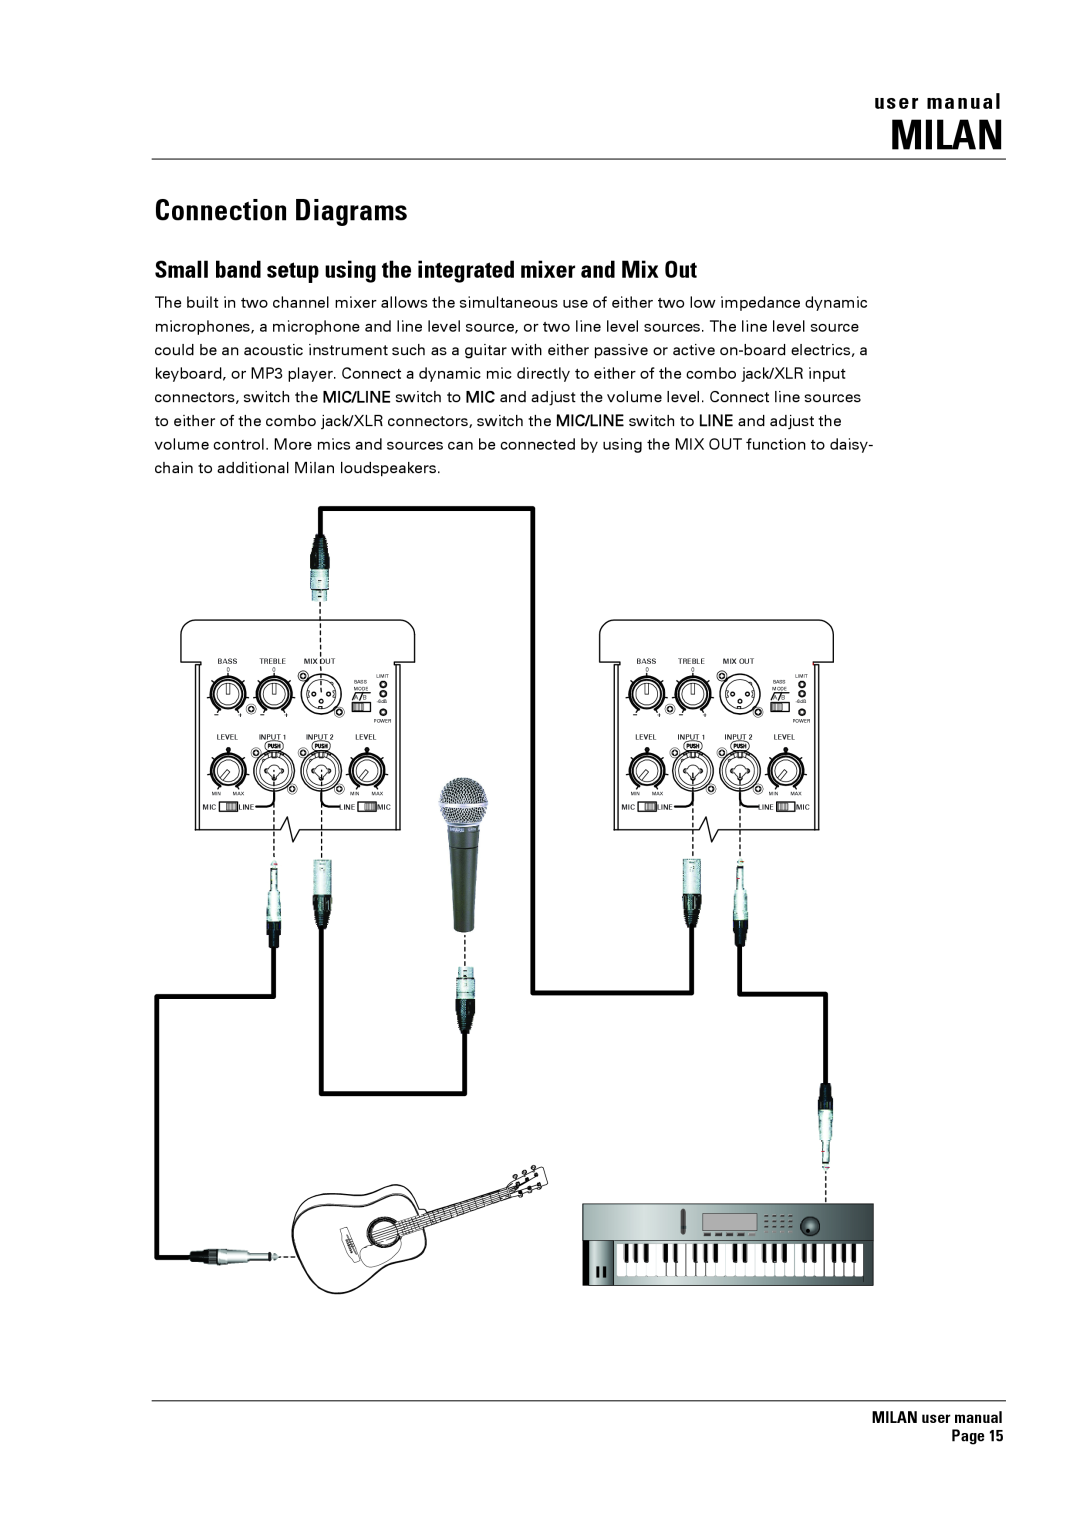 Turbosound MI5 Connection Diagrams, Milan, user manual 